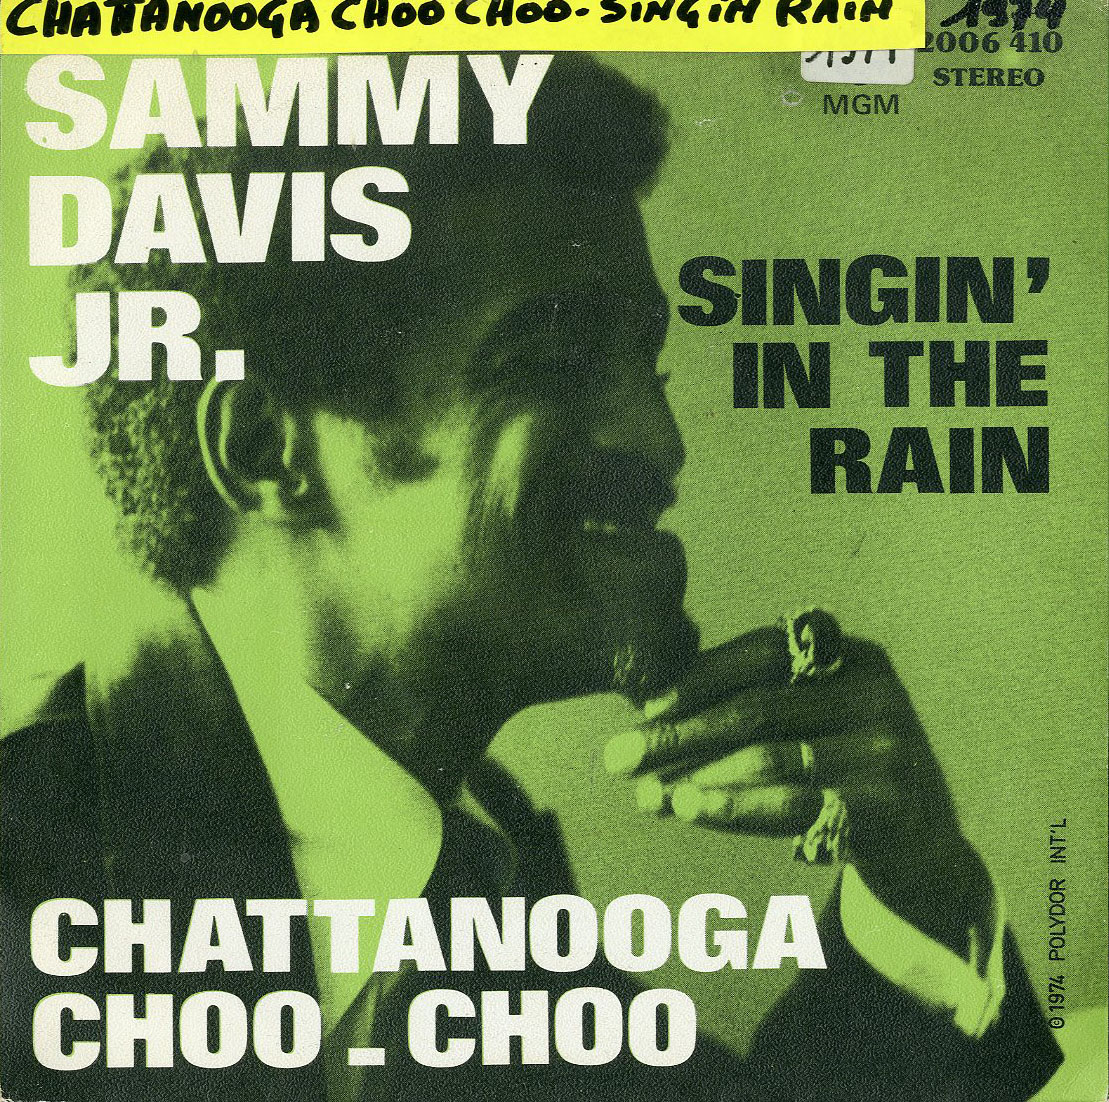 Albumcover Sammy Davis Jr. - Singin In the Rain / Chattanooga-Choo-Choo